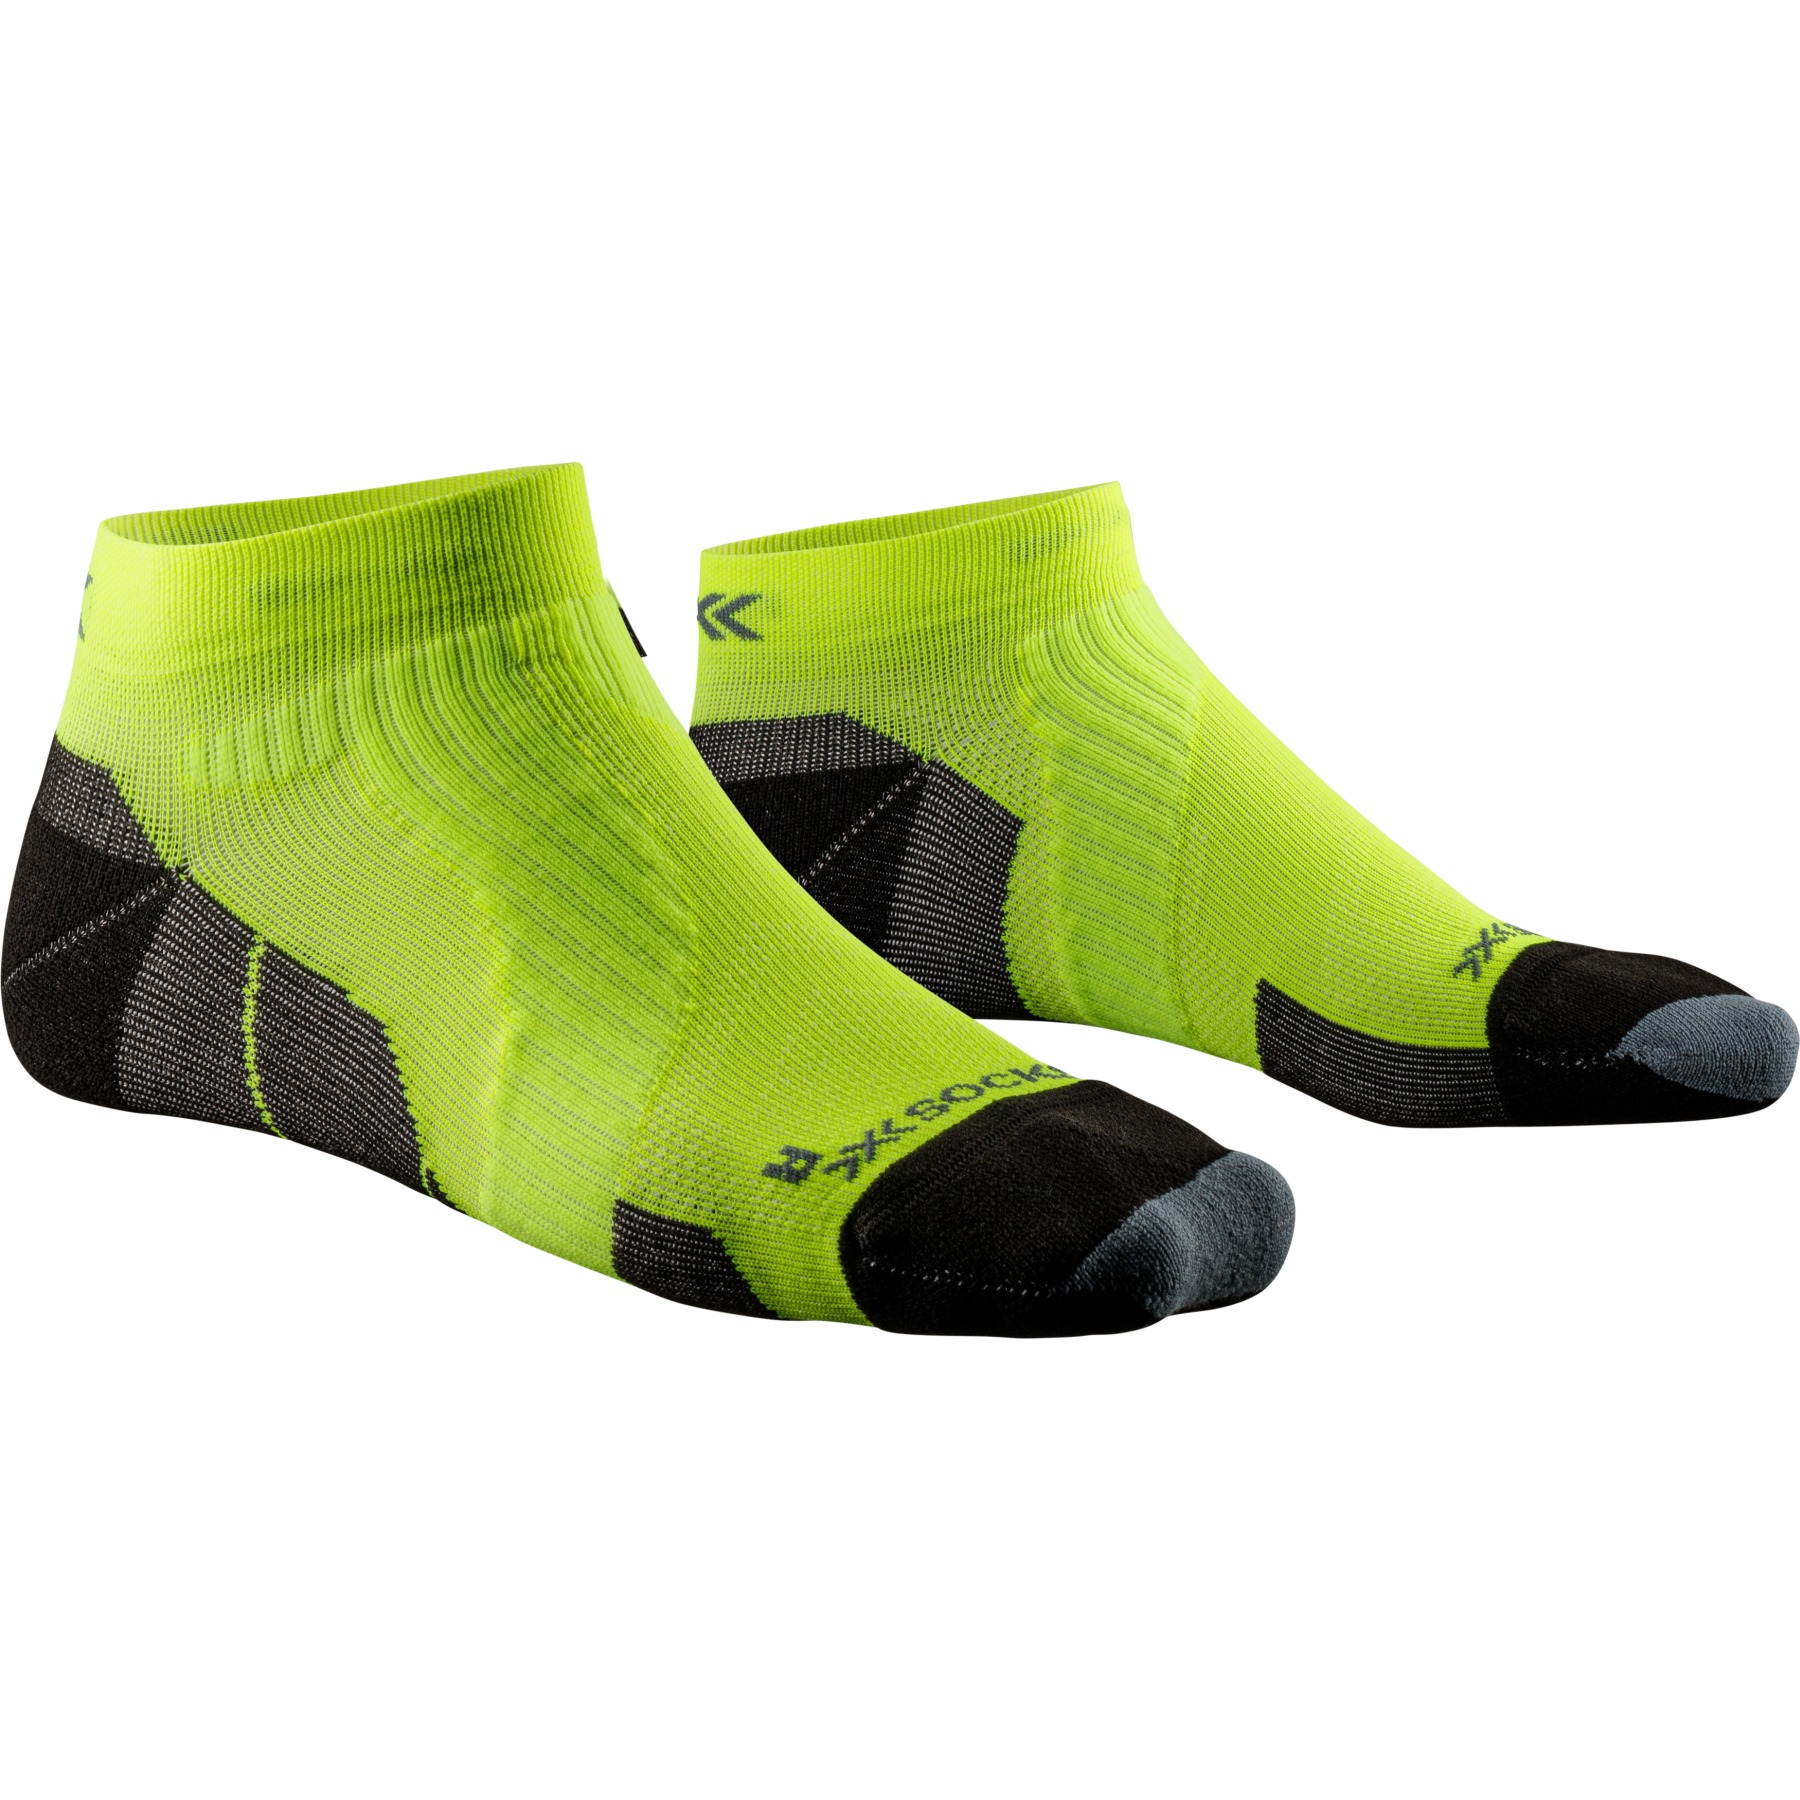 Produktbild von X-Socks Run Perform Low Cut Laufsocken - fluo yellow/opal black